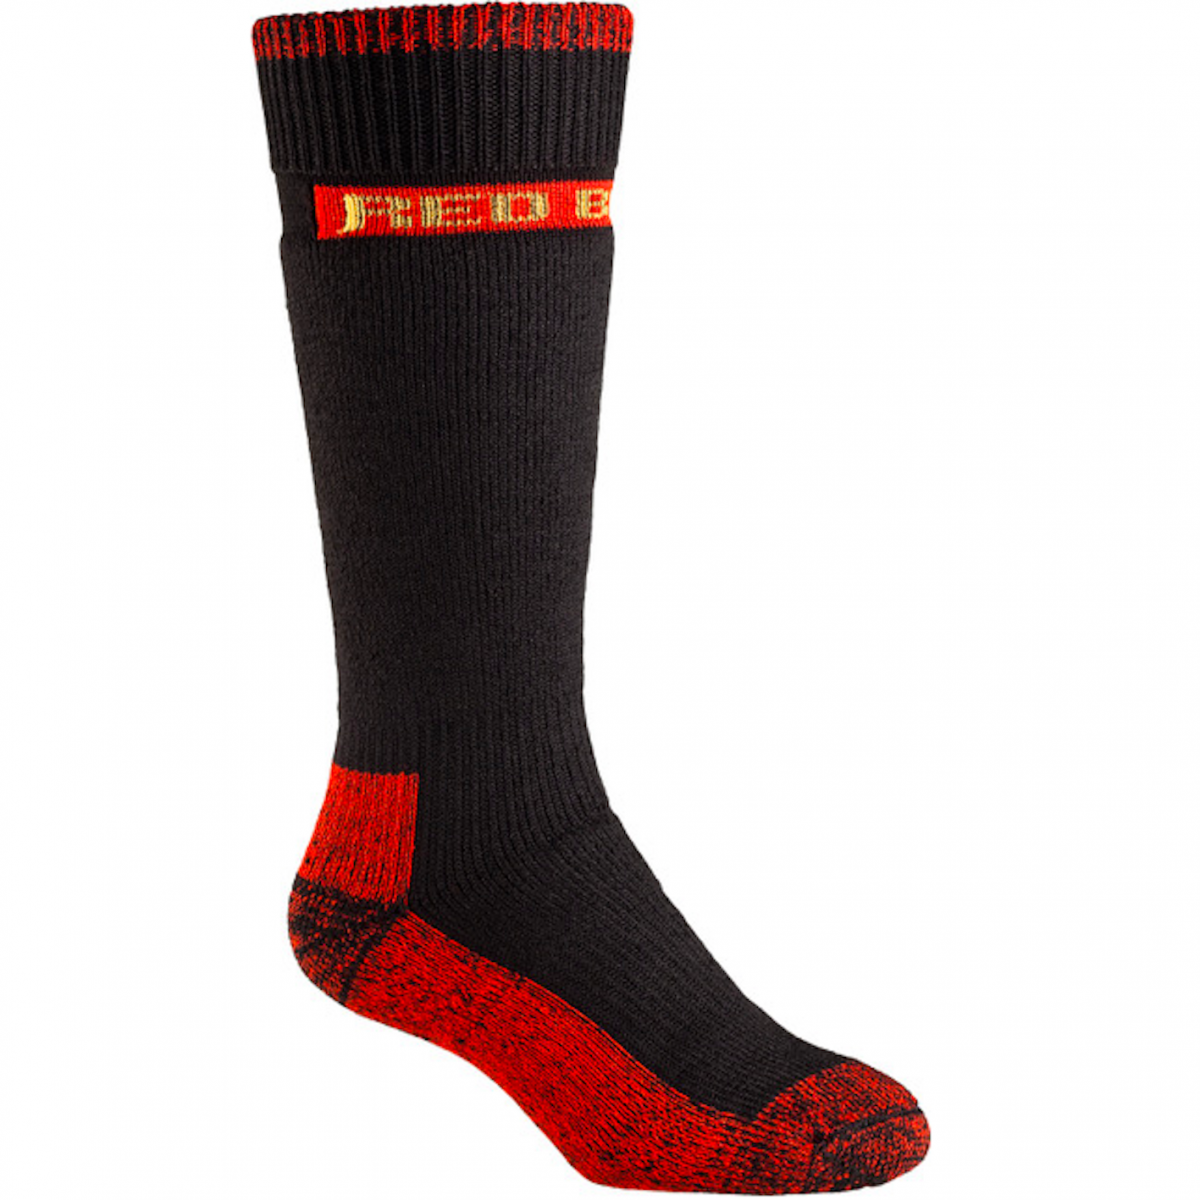 Skellerup Red Band Gumboot Sock